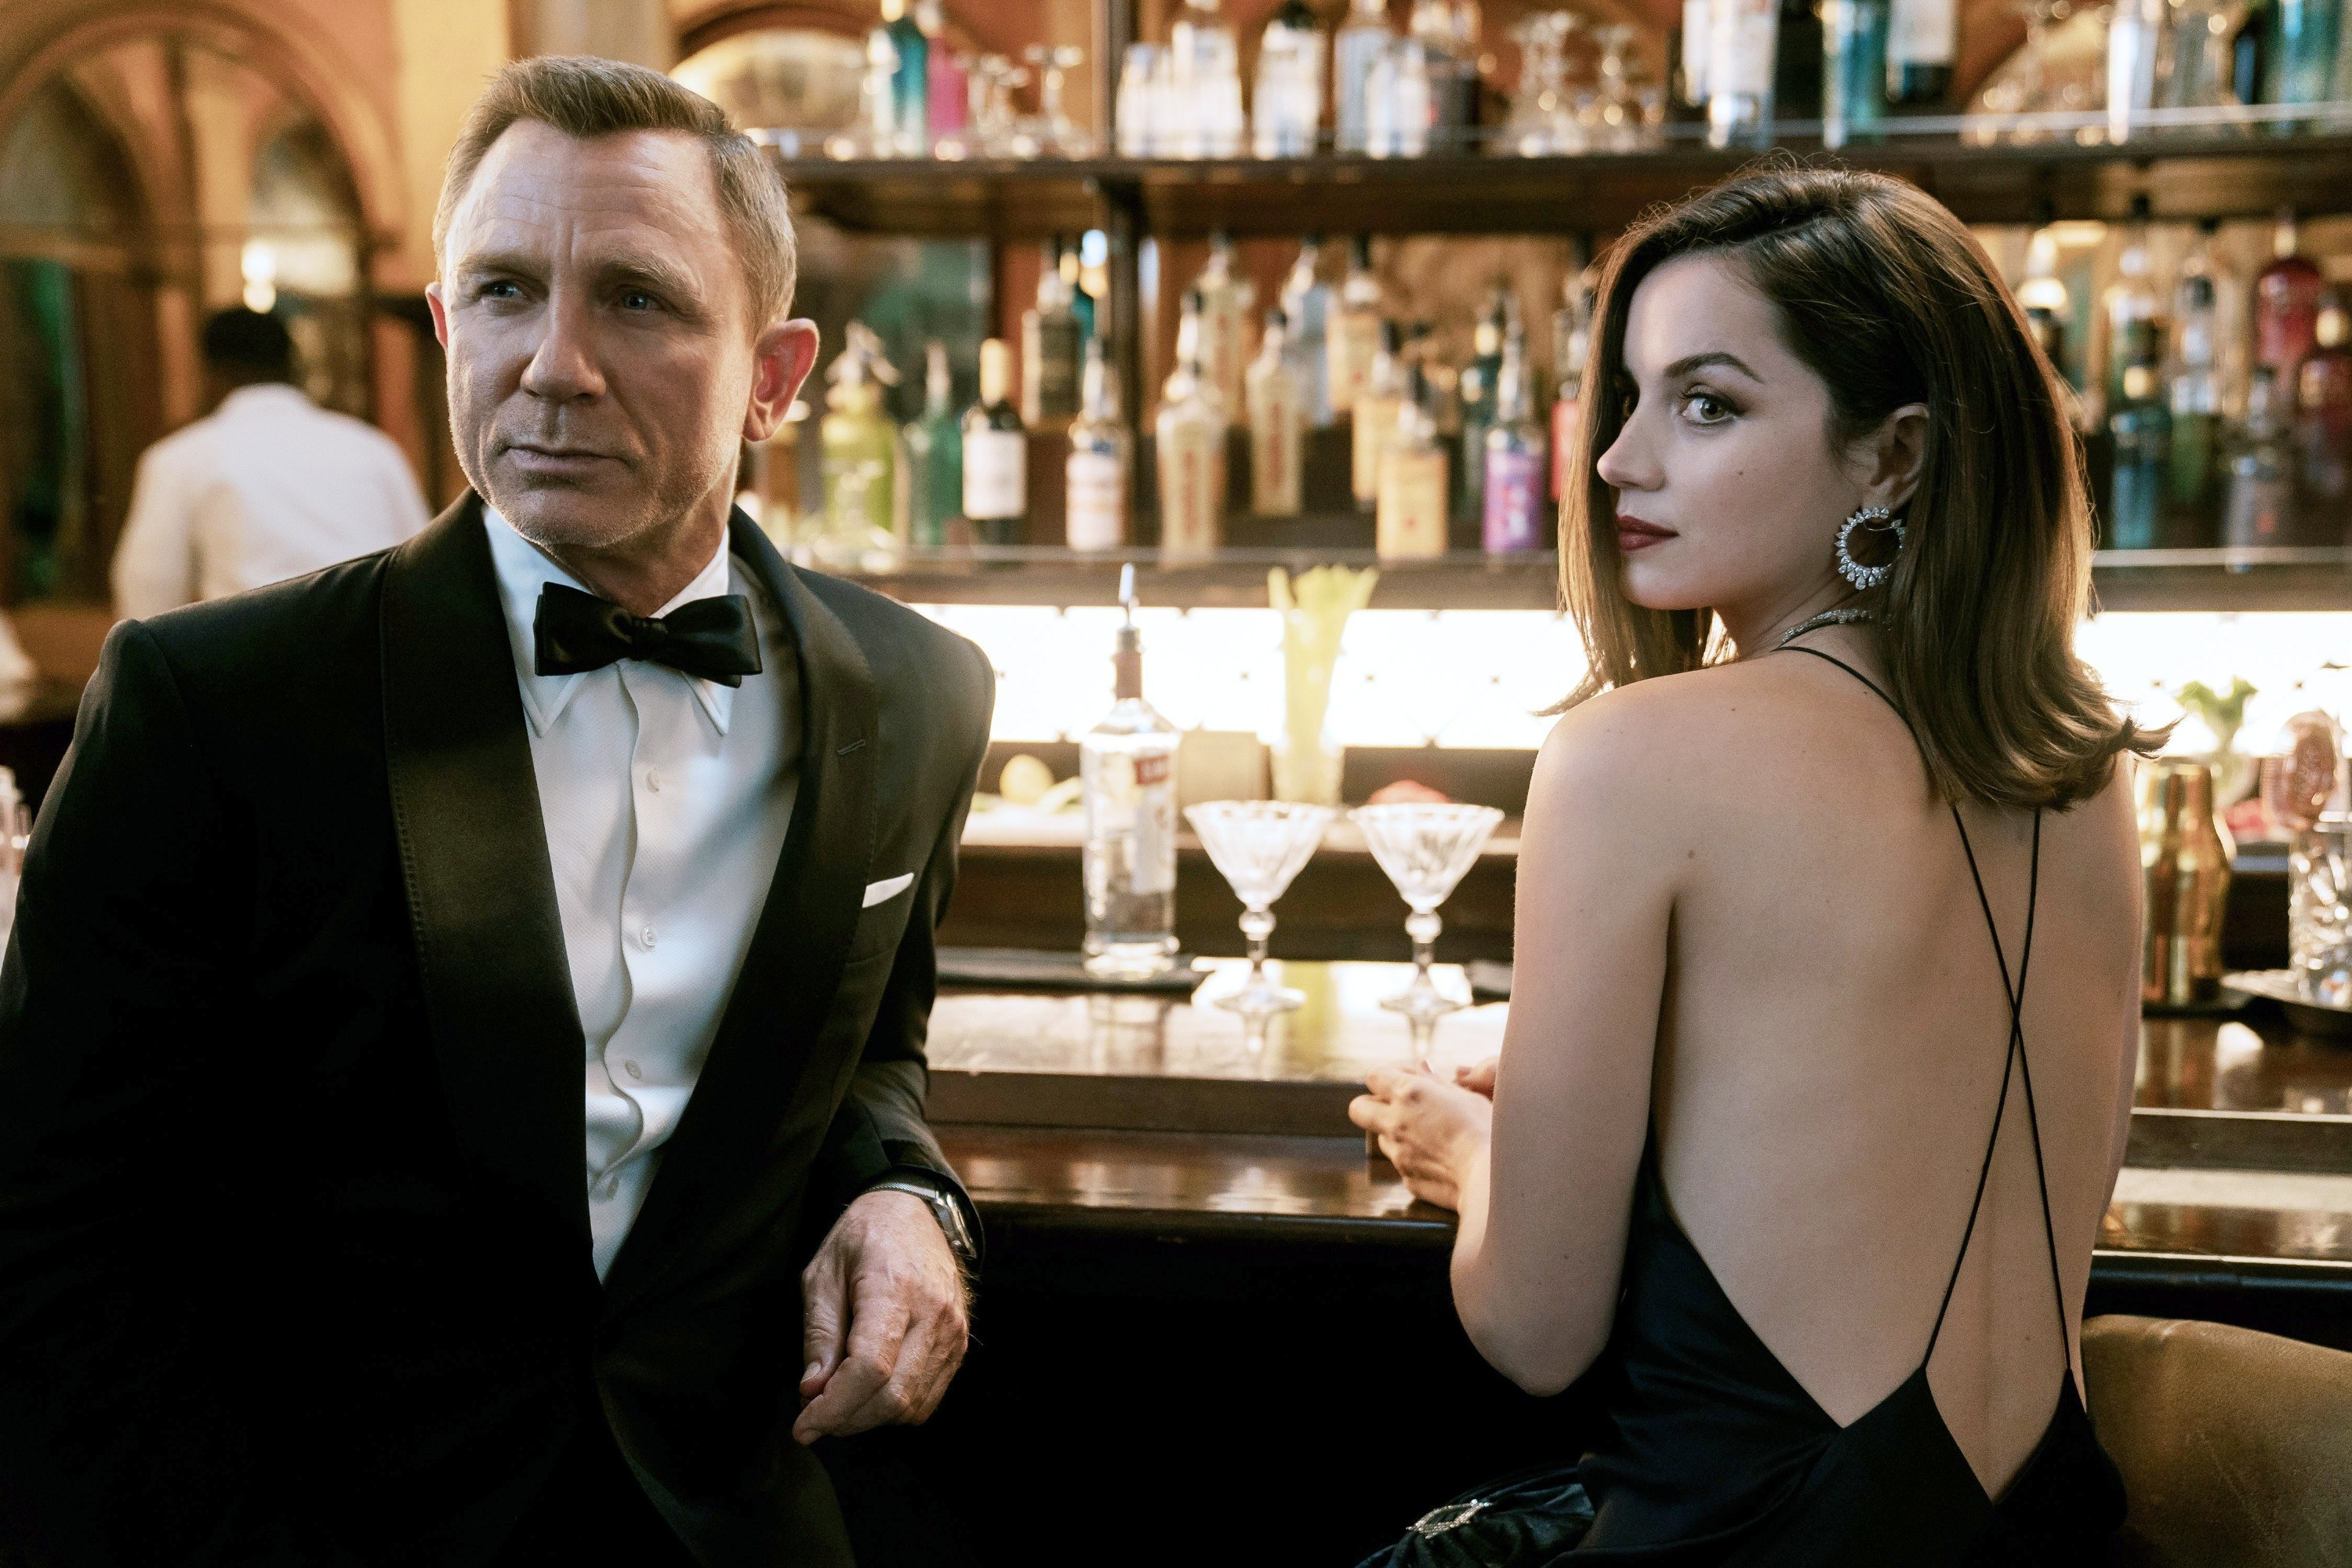 James Bond and Paloma sit at the bar together